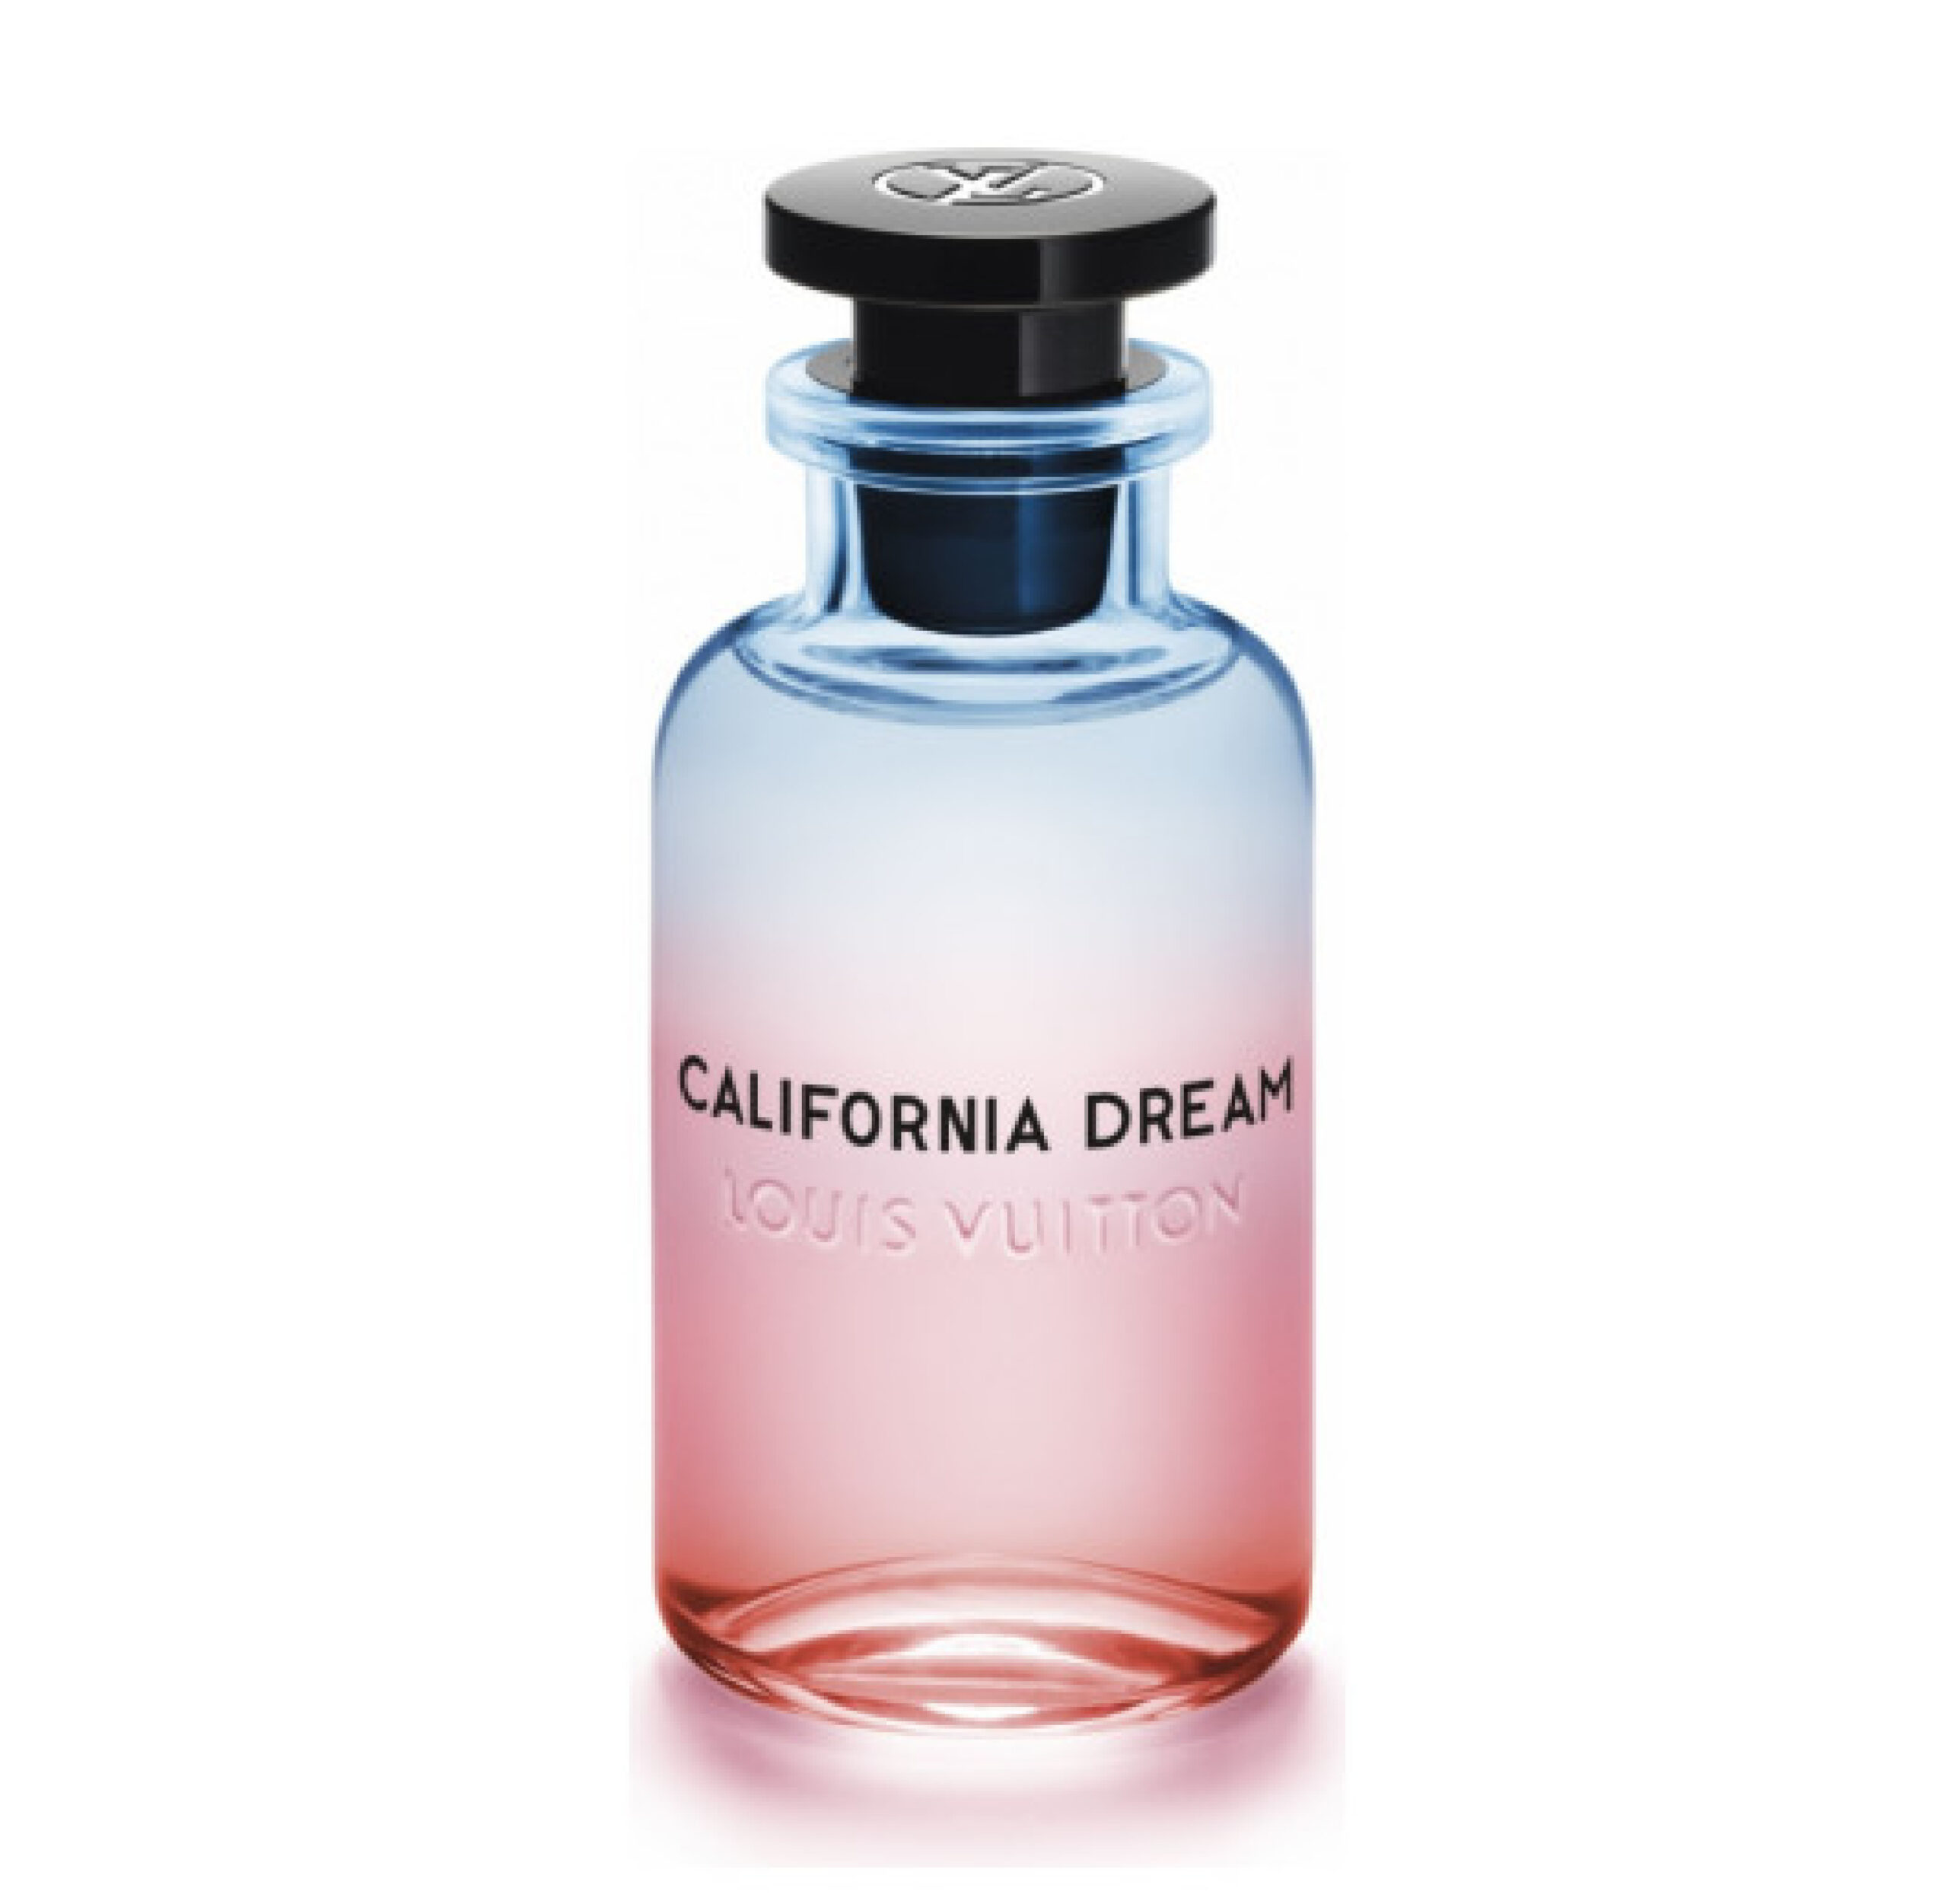 Louis Vuitton - California Dream, (ルイ・ヴィトン - カリフォルニア・ドリーム)